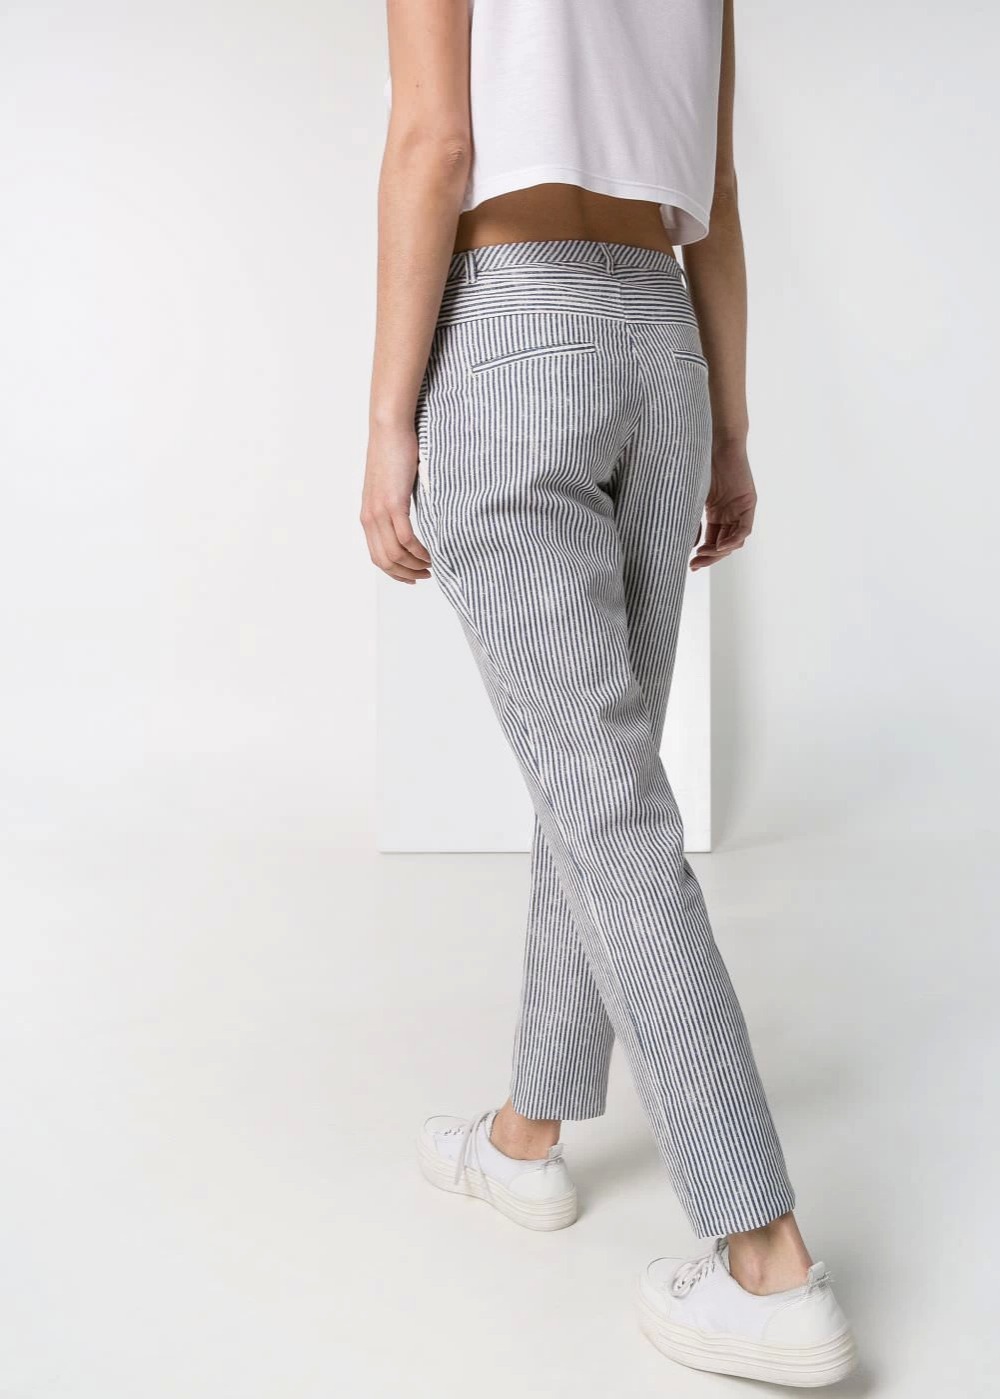 03LJ01 Fashion women's Elegant stripe cotton linen suit pants leisure pants pockets slim trousers brand designer pants